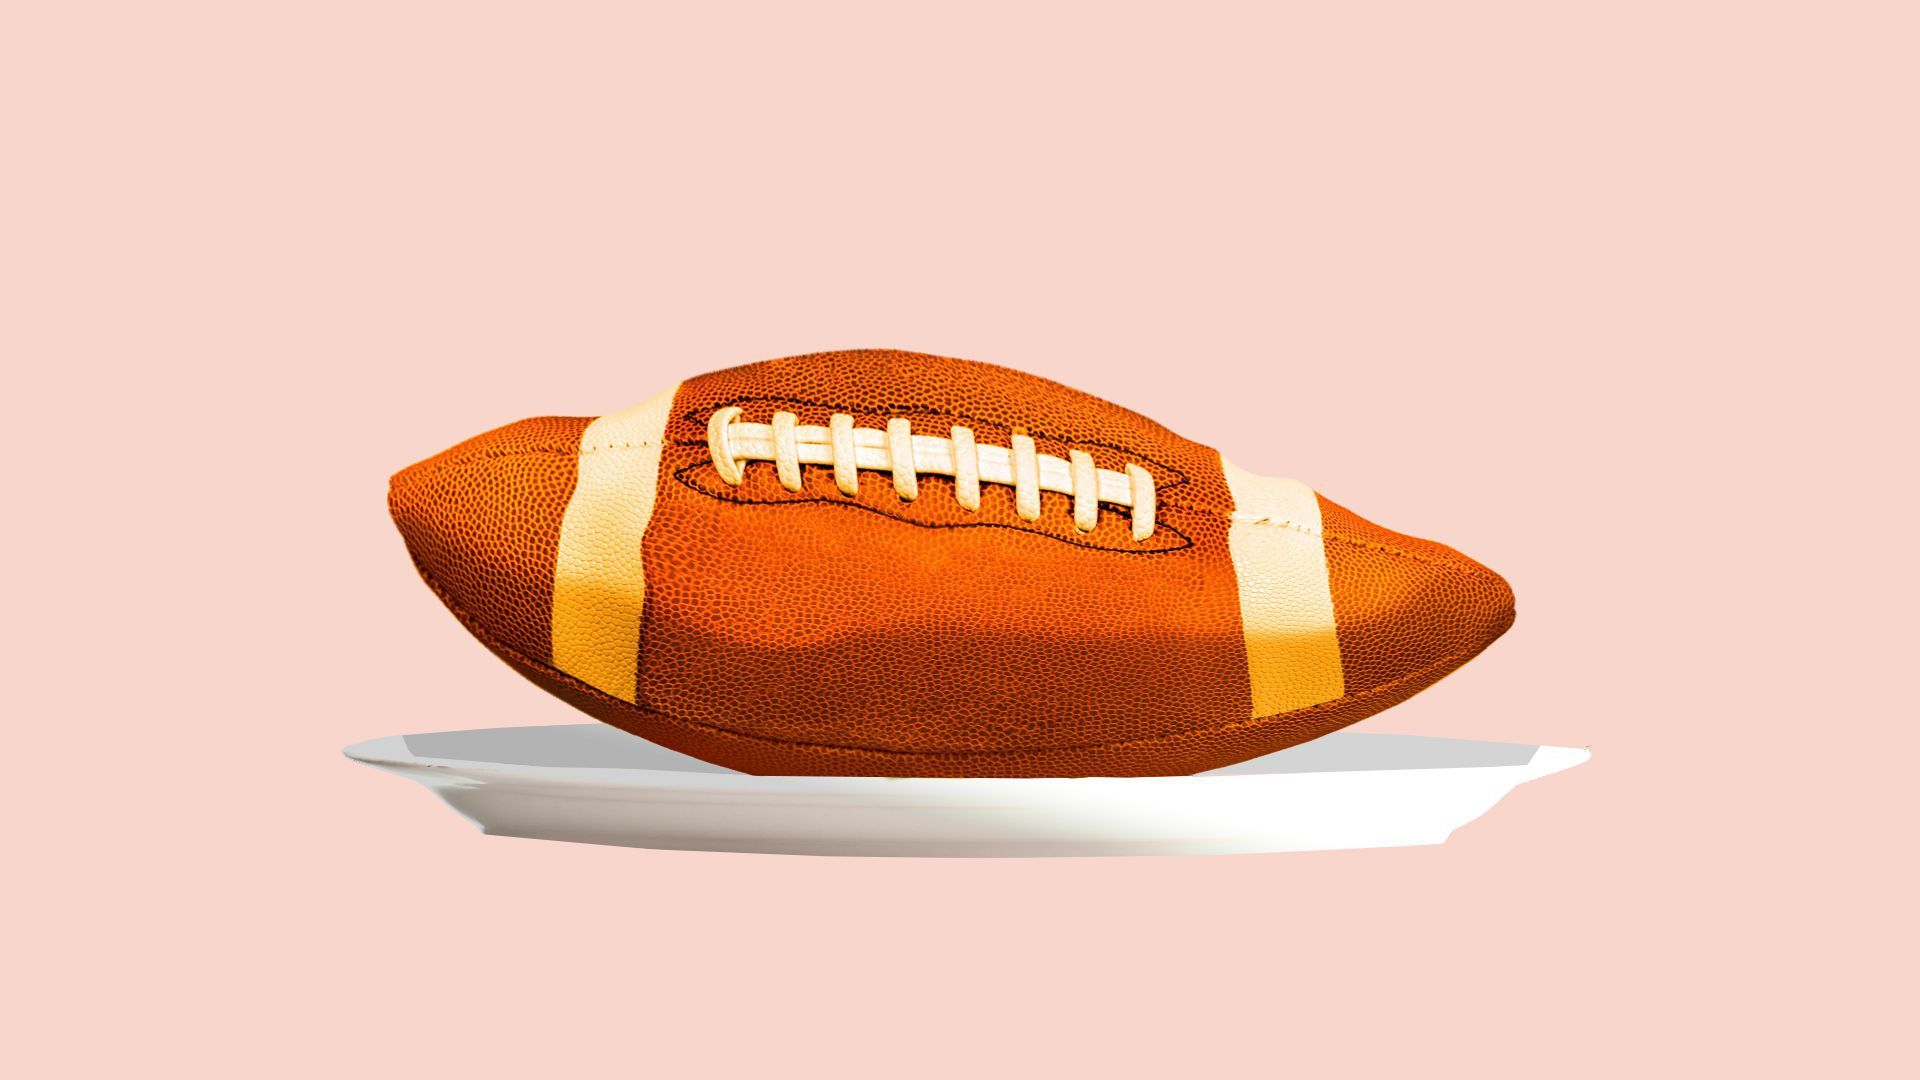 Photo illustration of a deflated football